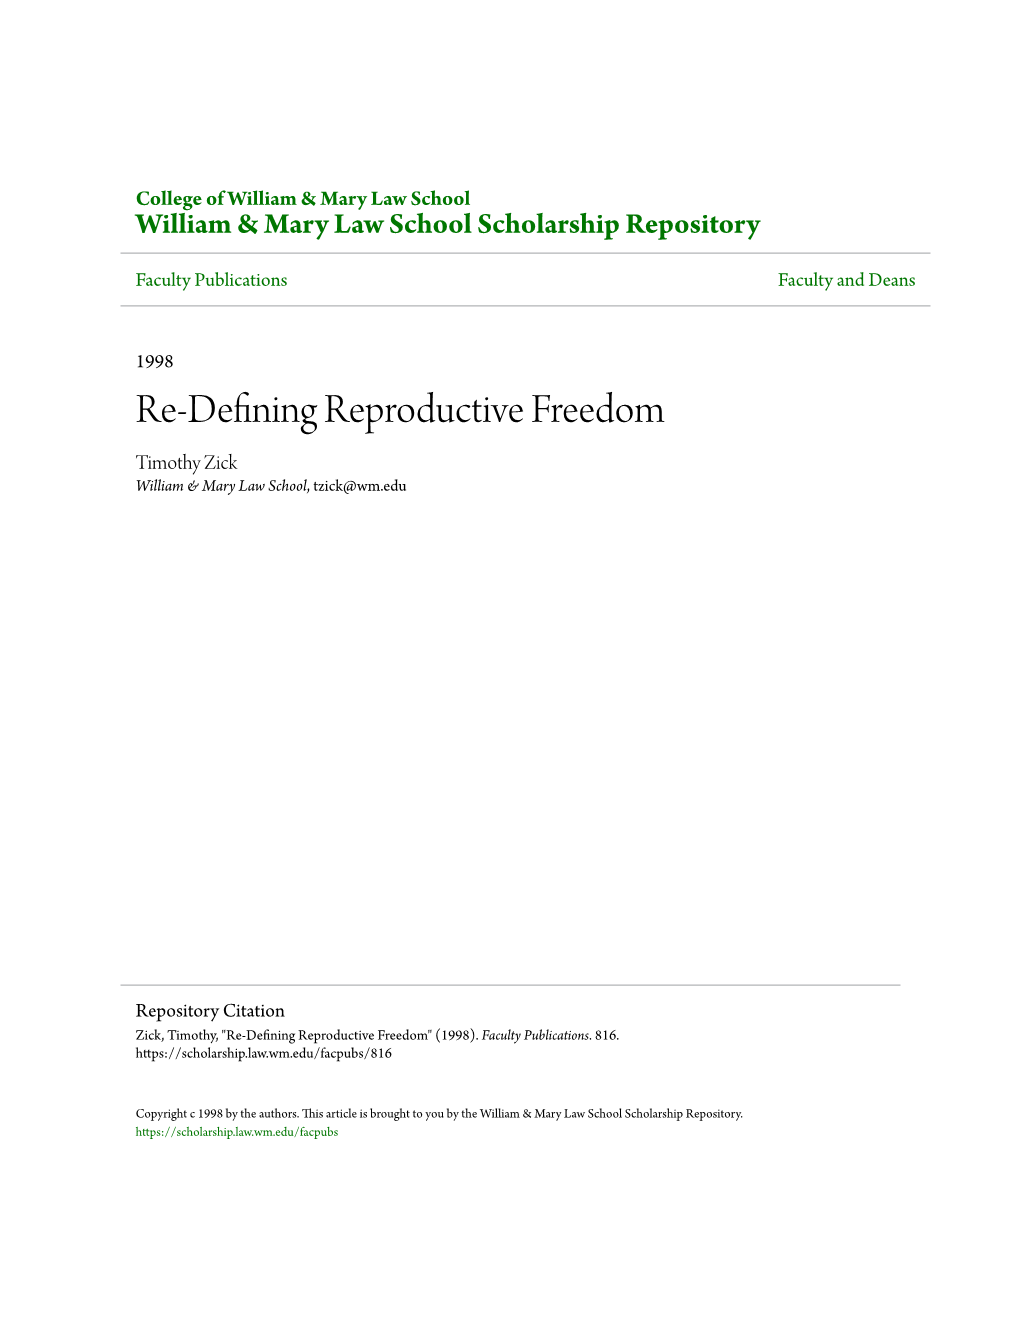 Re-Defining Reproductive Freedom Timothy Zick William & Mary Law School, Tzick@Wm.Edu